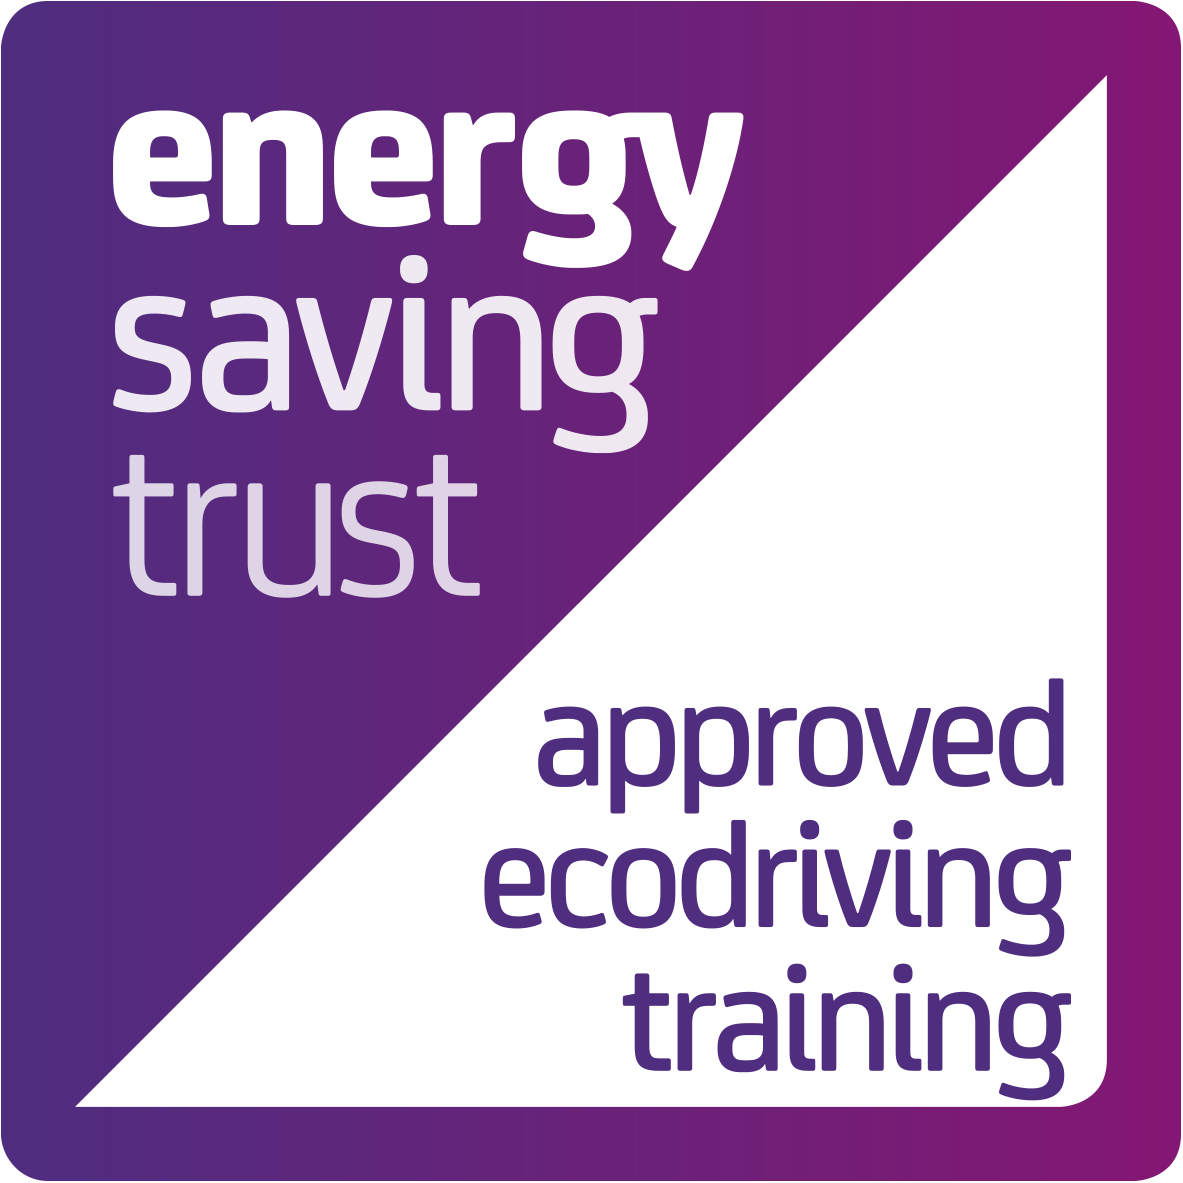 Energy saving trust approved ecodriving training